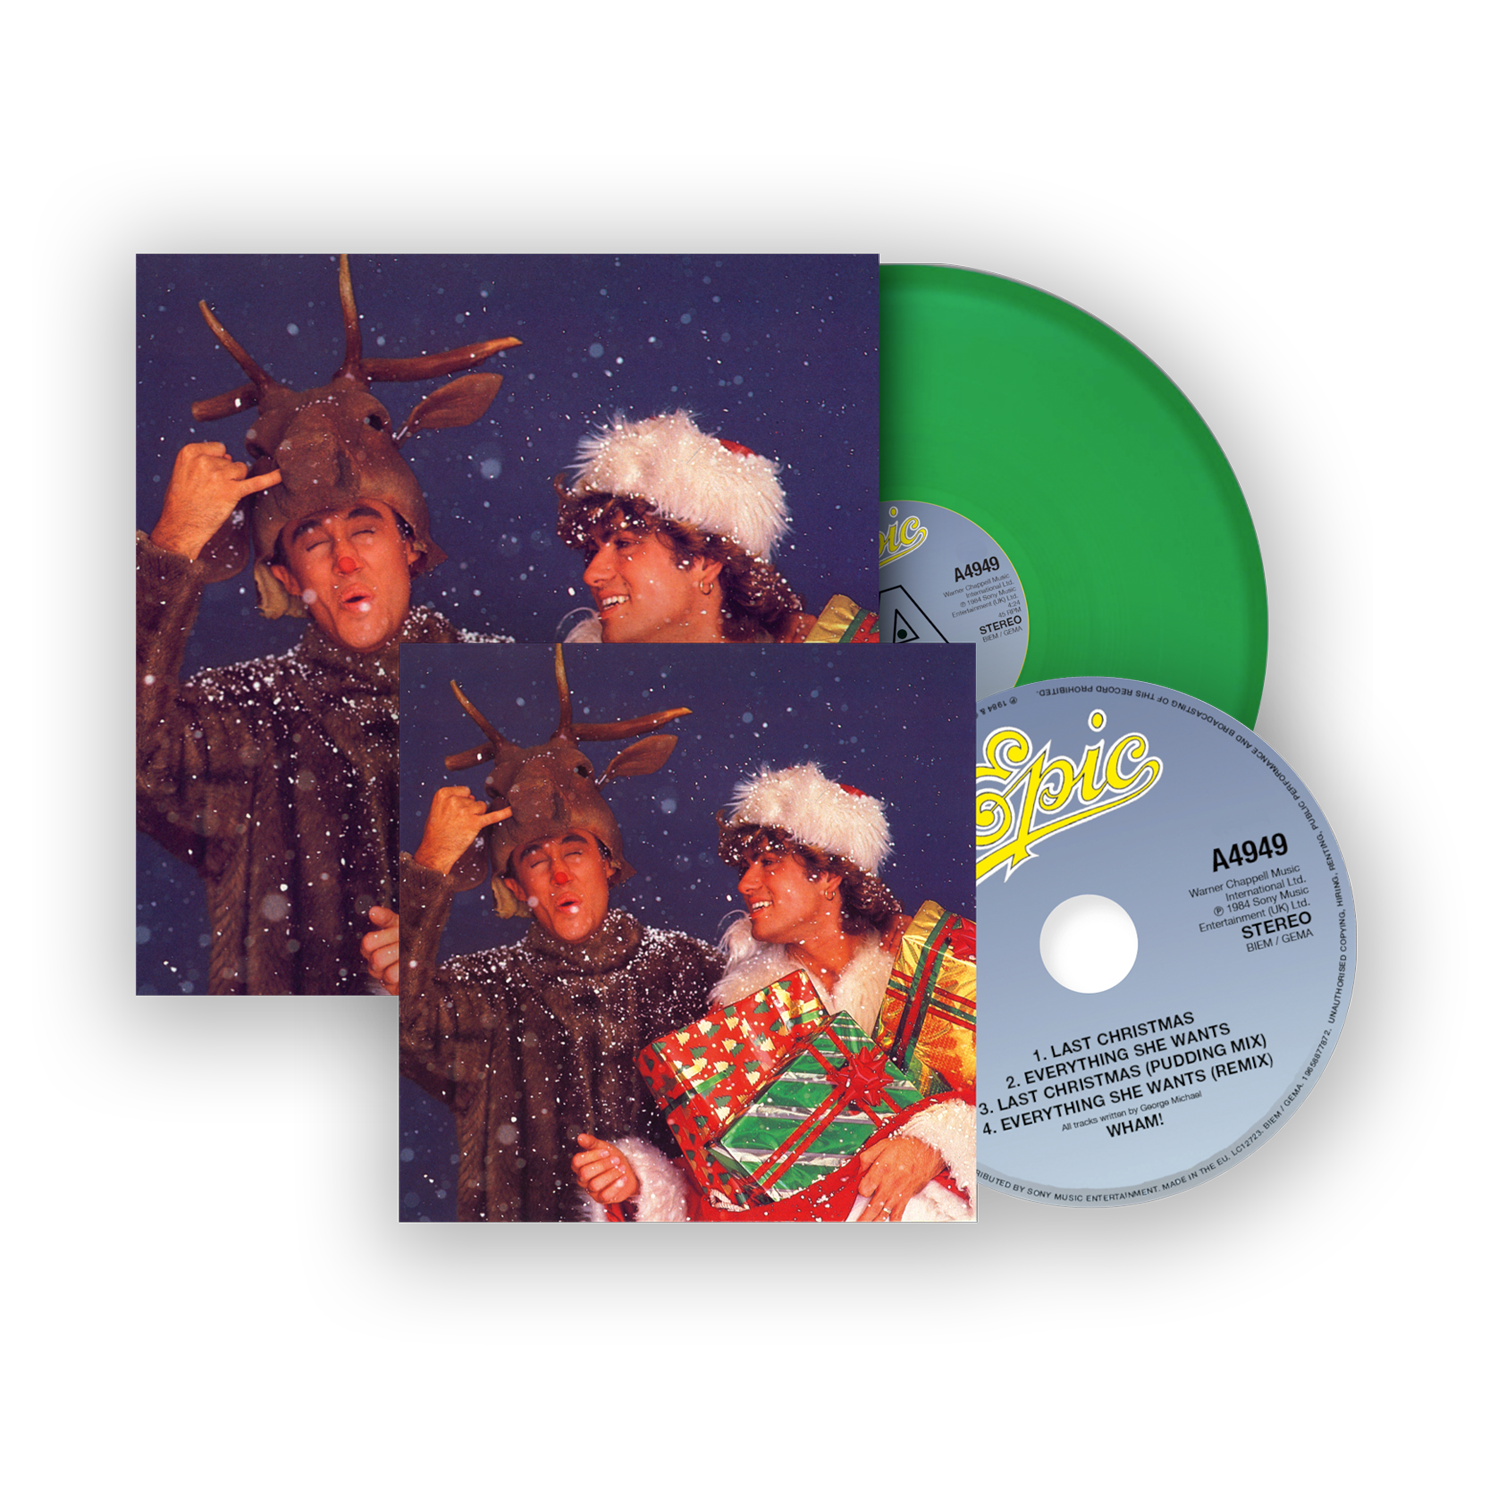 Last Christmas | CD Single + 7" Single